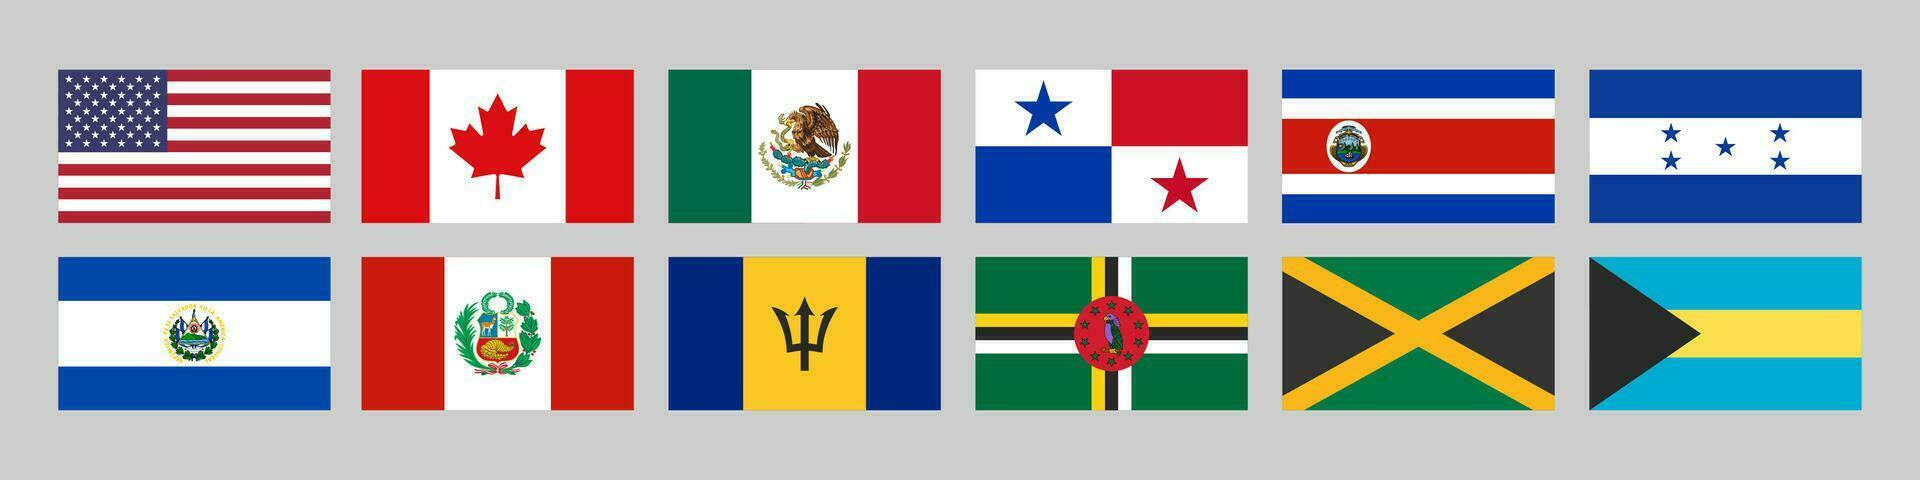 National Flaggen von das Amerika, vereinigt Zustände, Kanada, Mexiko, Panama, Costa rica, Peru, Barbados, Honduras, Dominika, Jamaika, Bahamas vektor